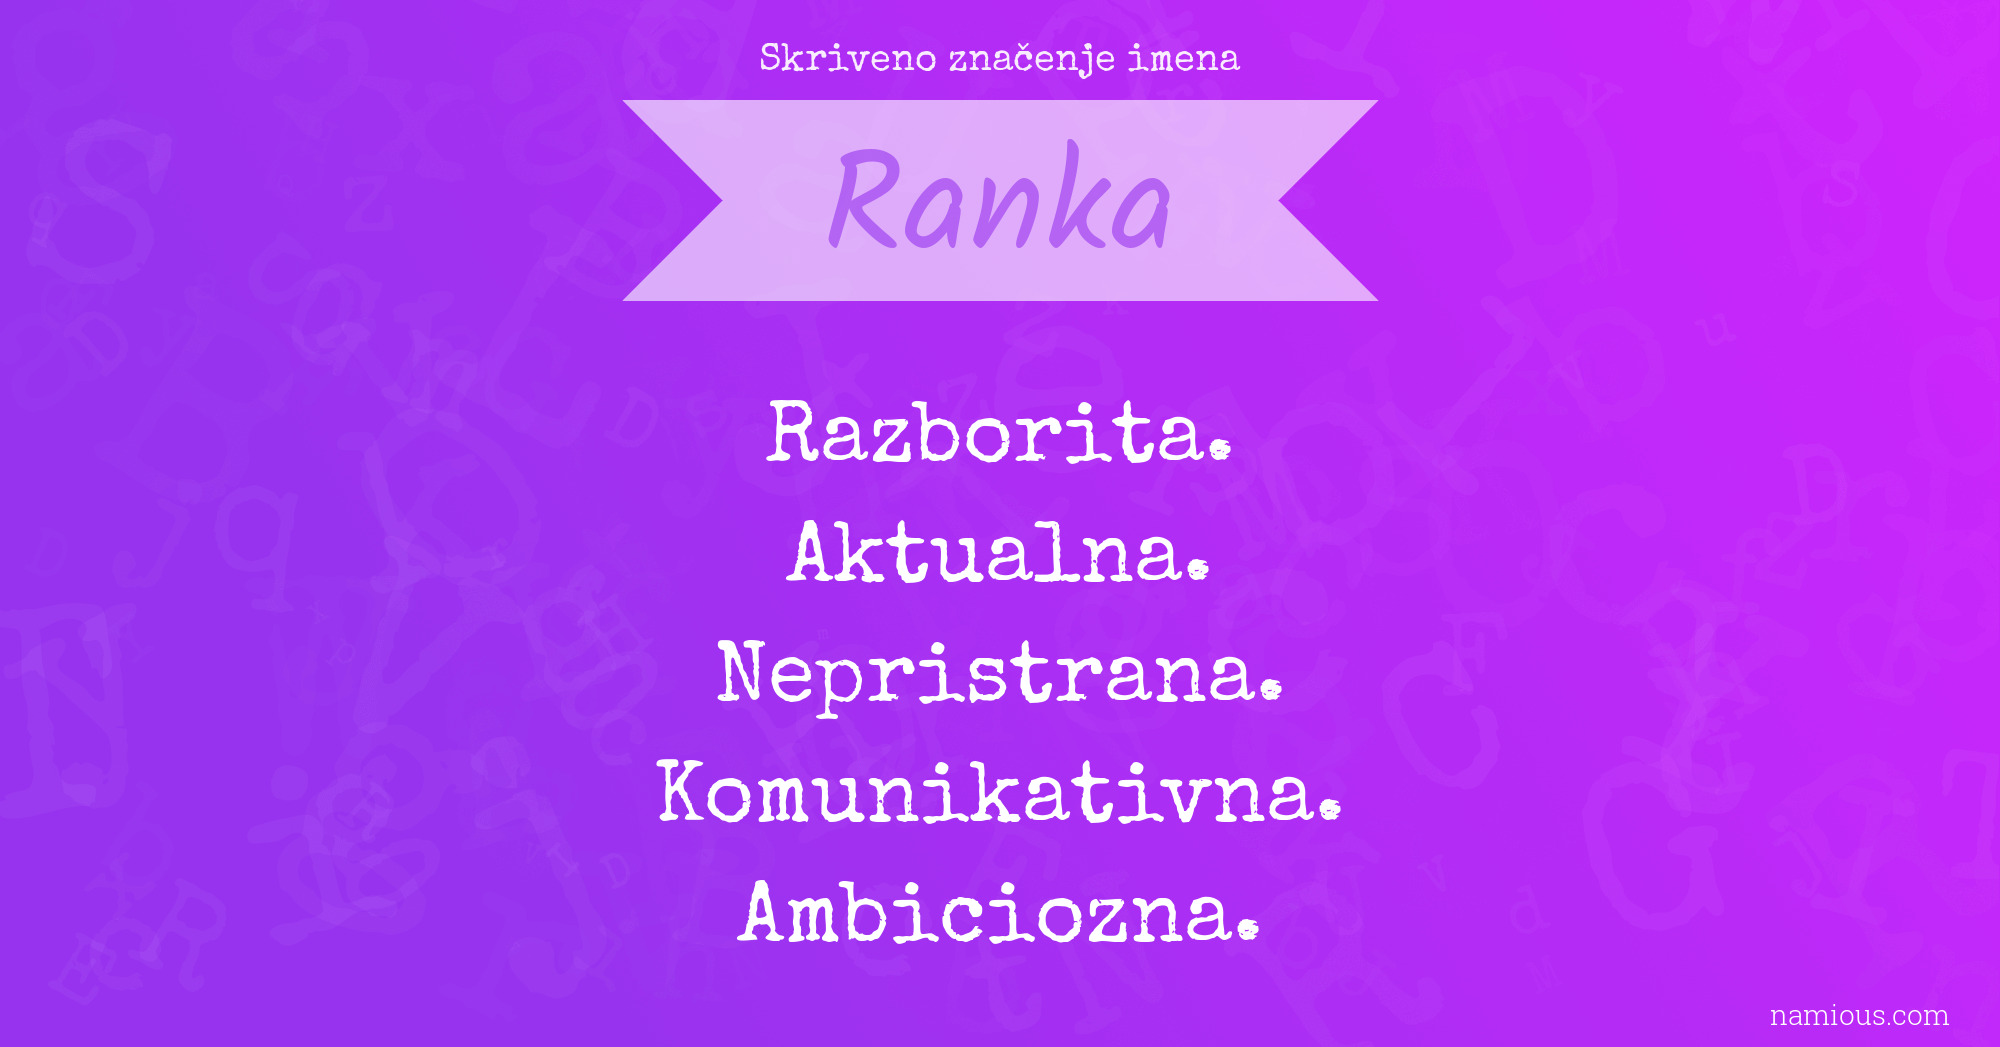 Skriveno značenje imena Ranka